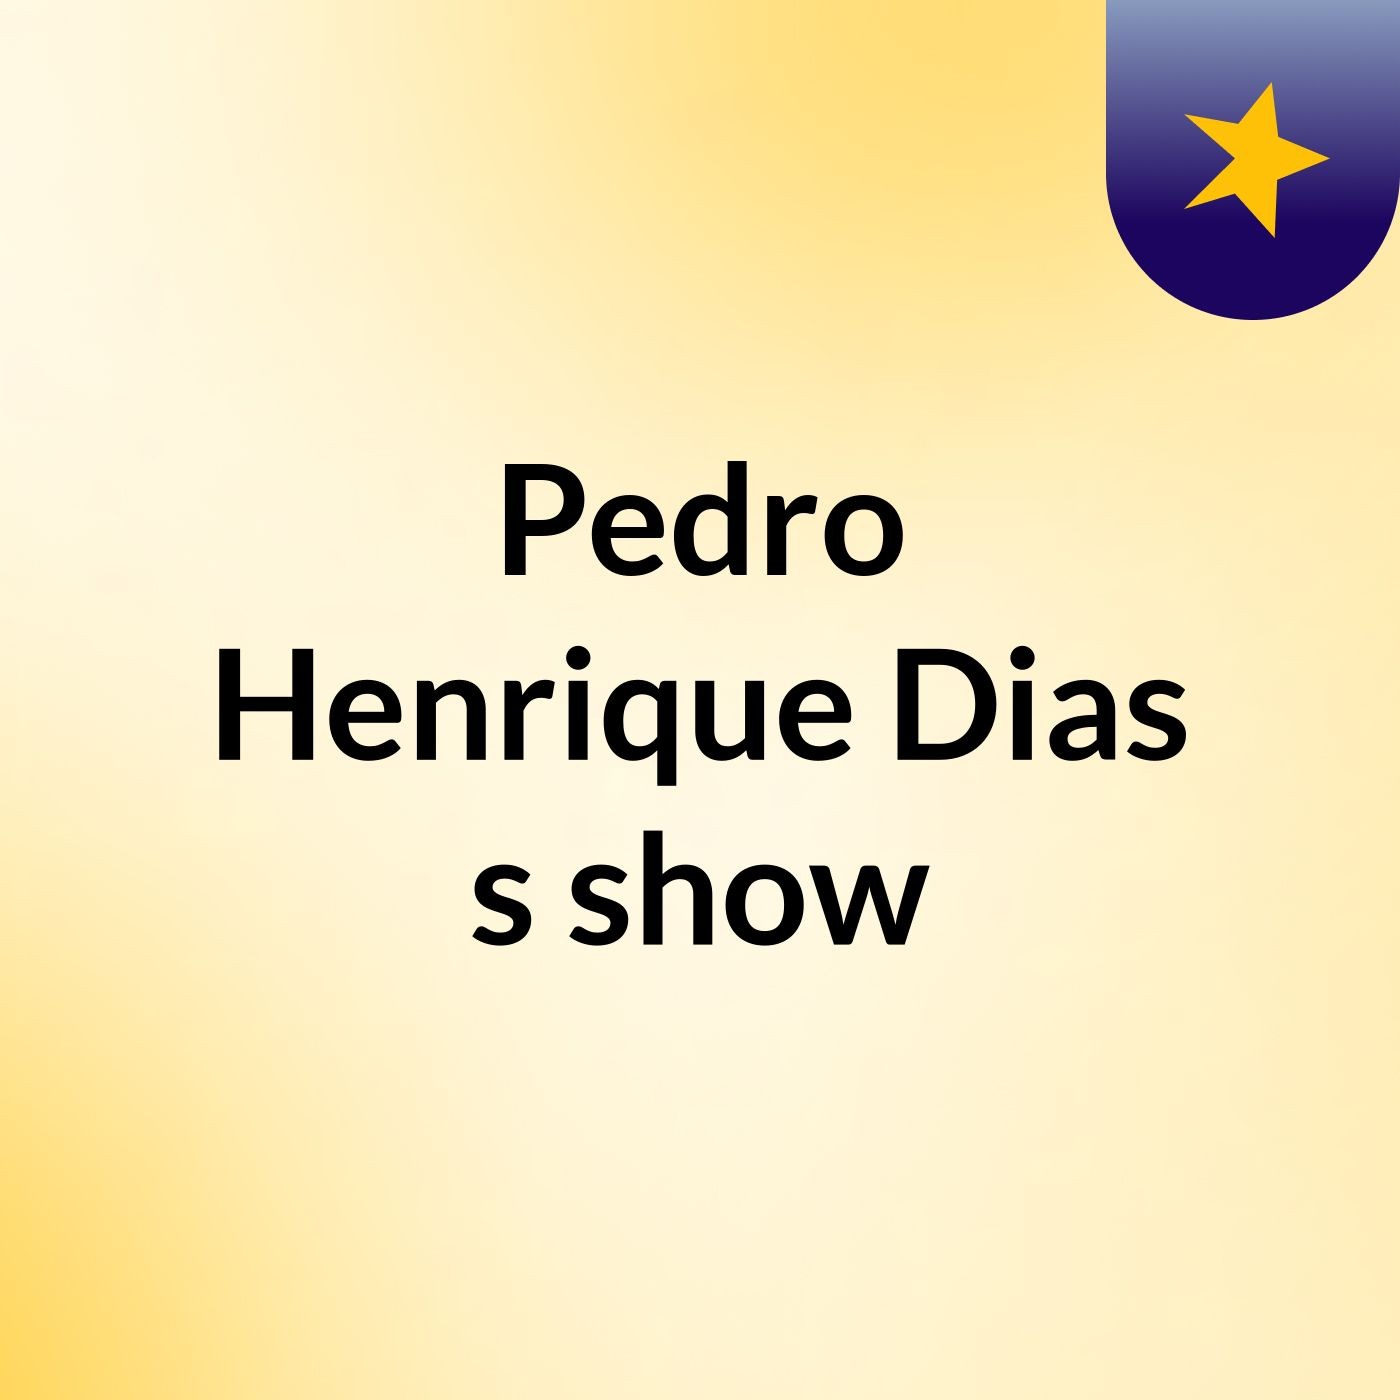 Pedro Henrique Dias's show